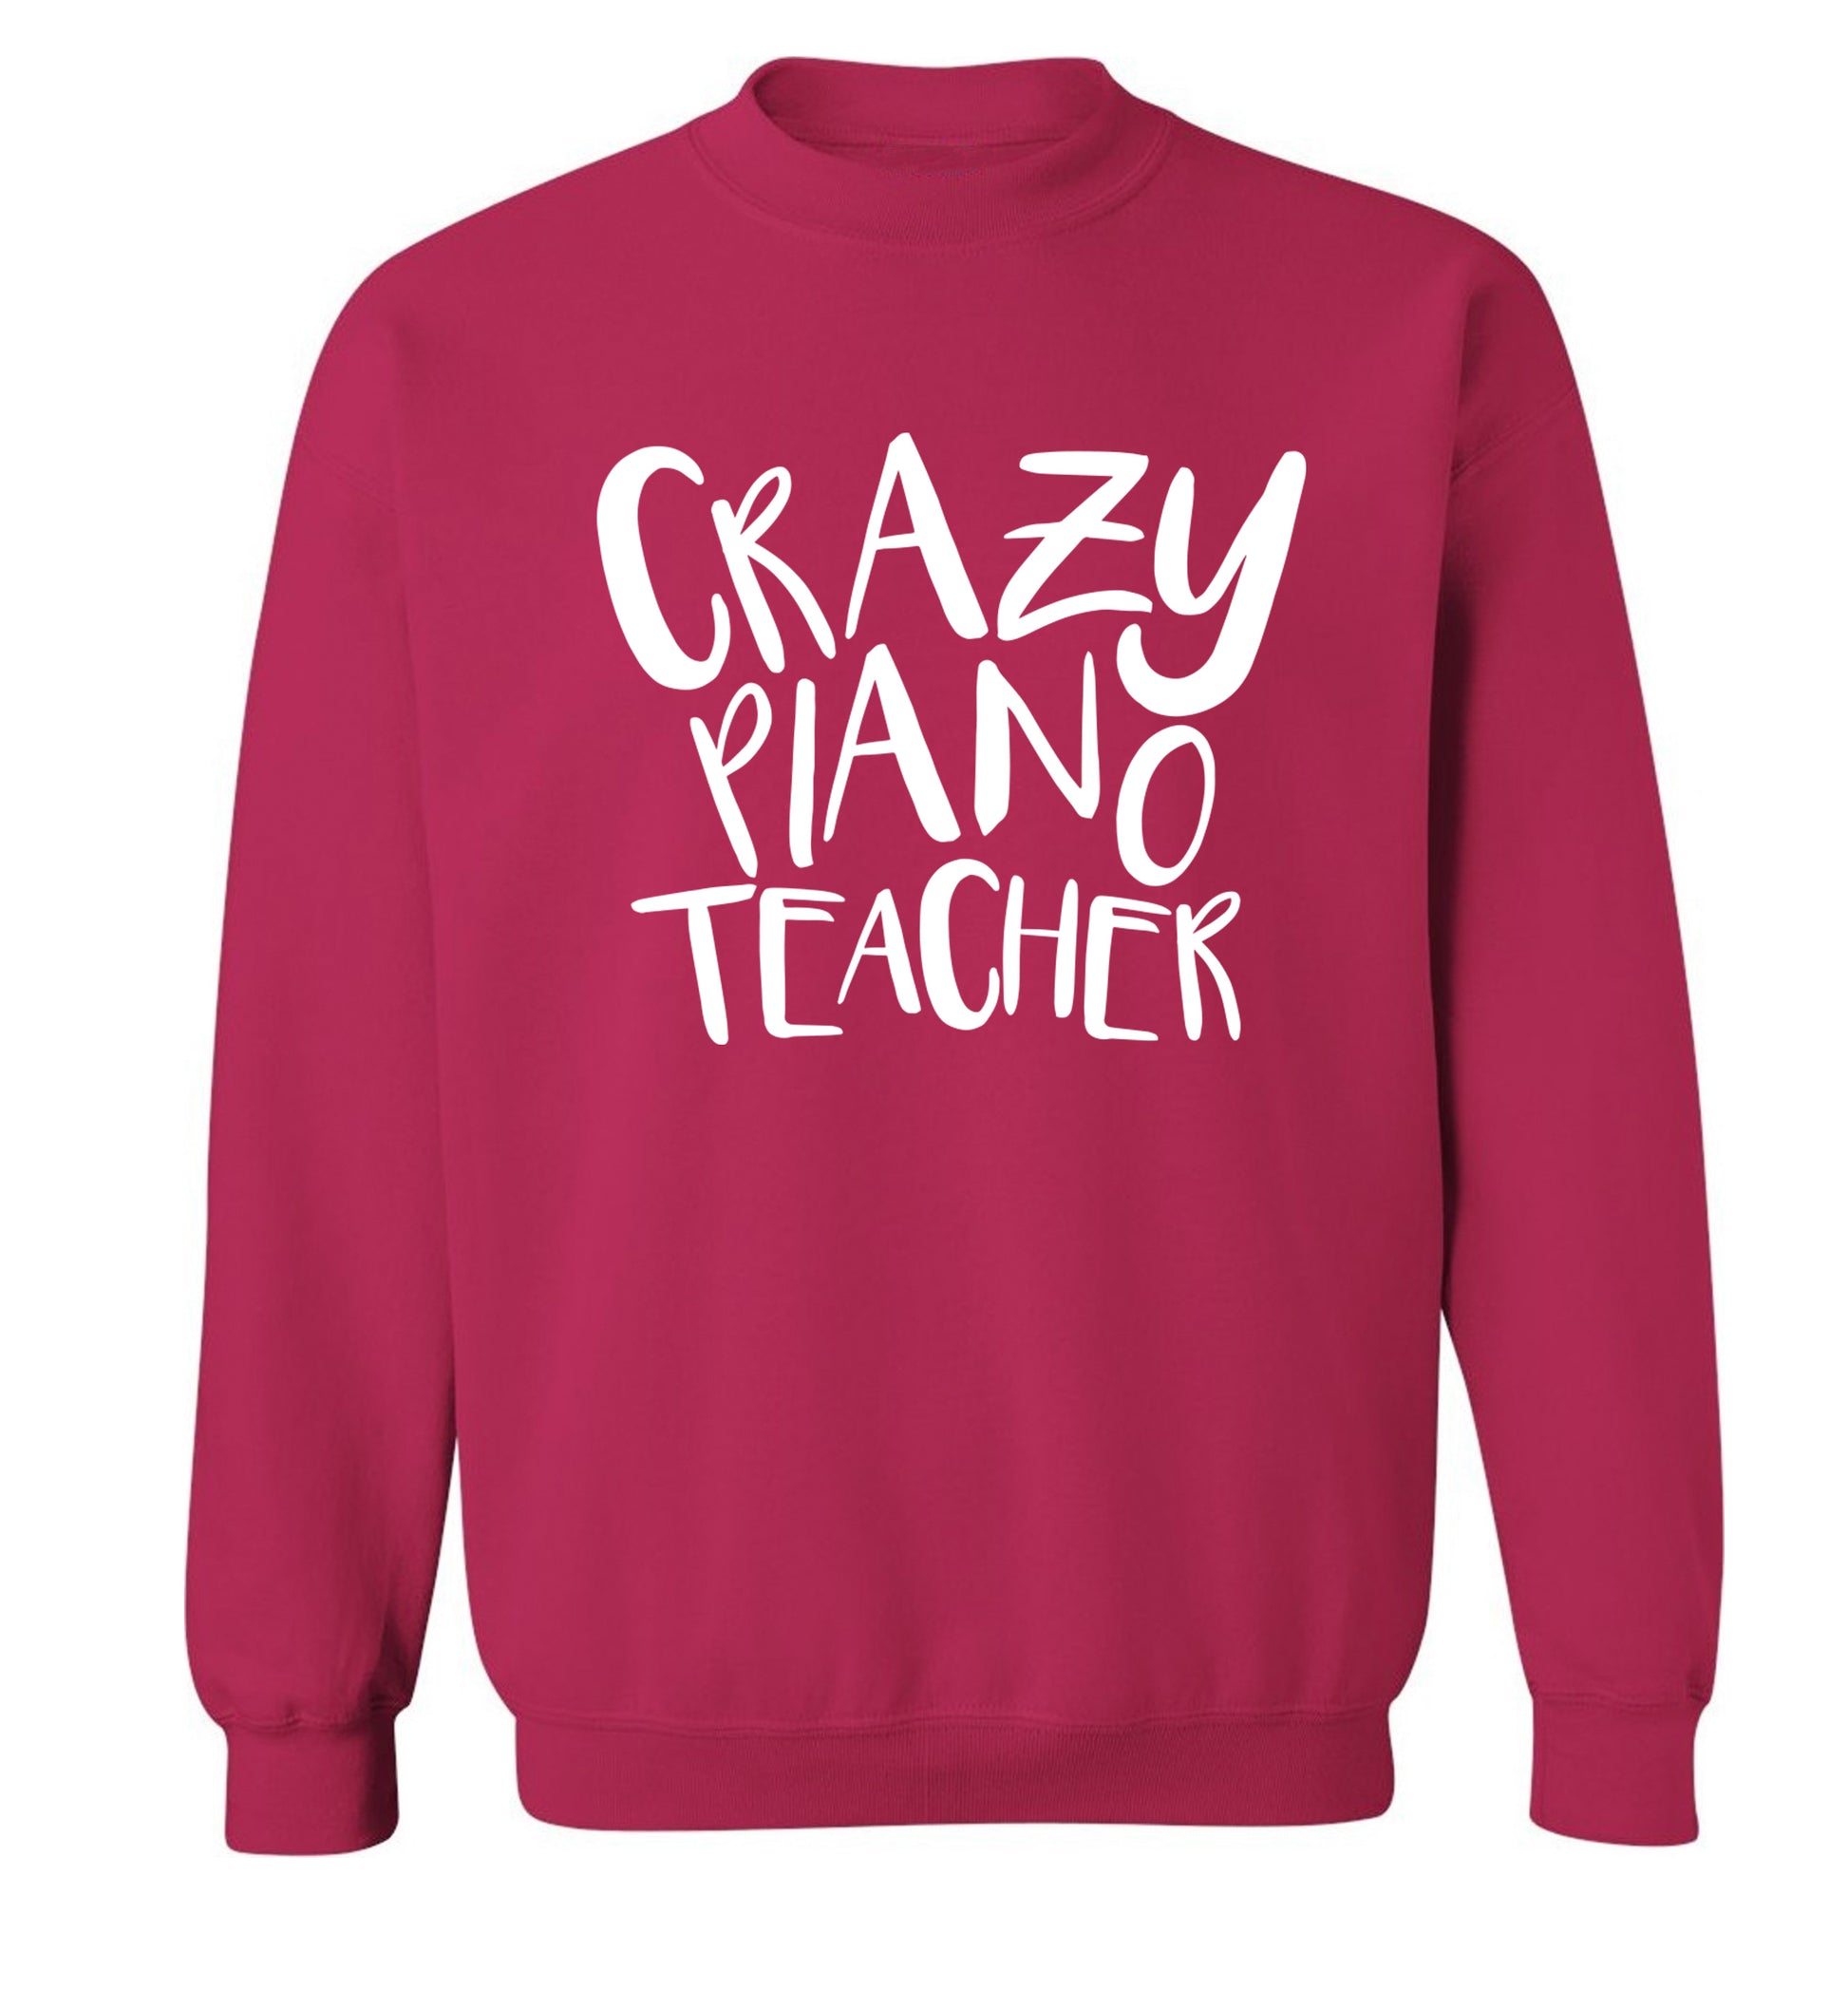 Crazy piano teacher Adult's unisex pink Sweater 2XL